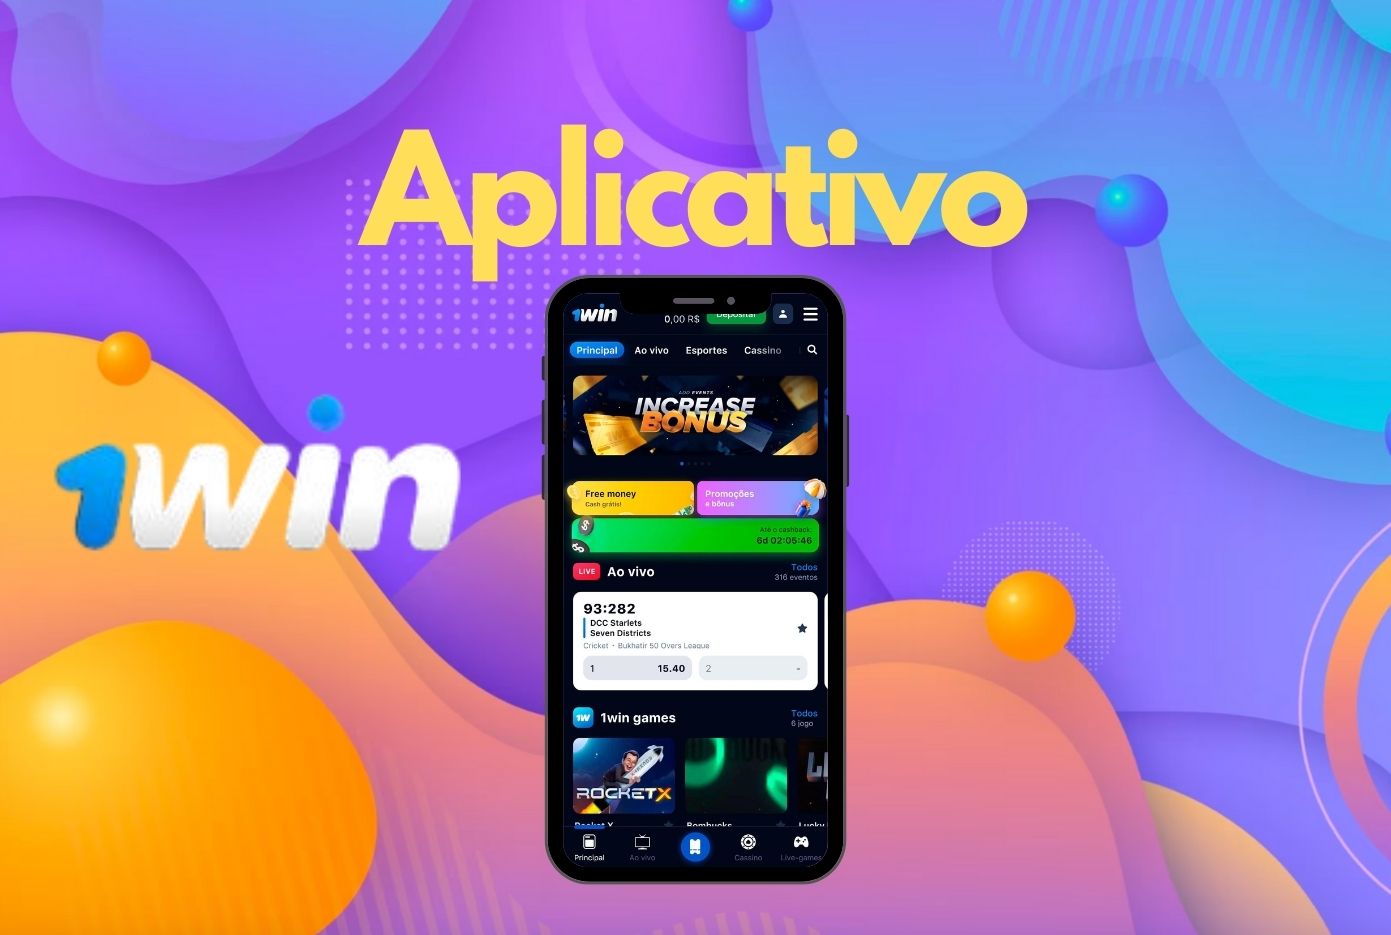 1win Brasil faça o download e instale o aplicativo